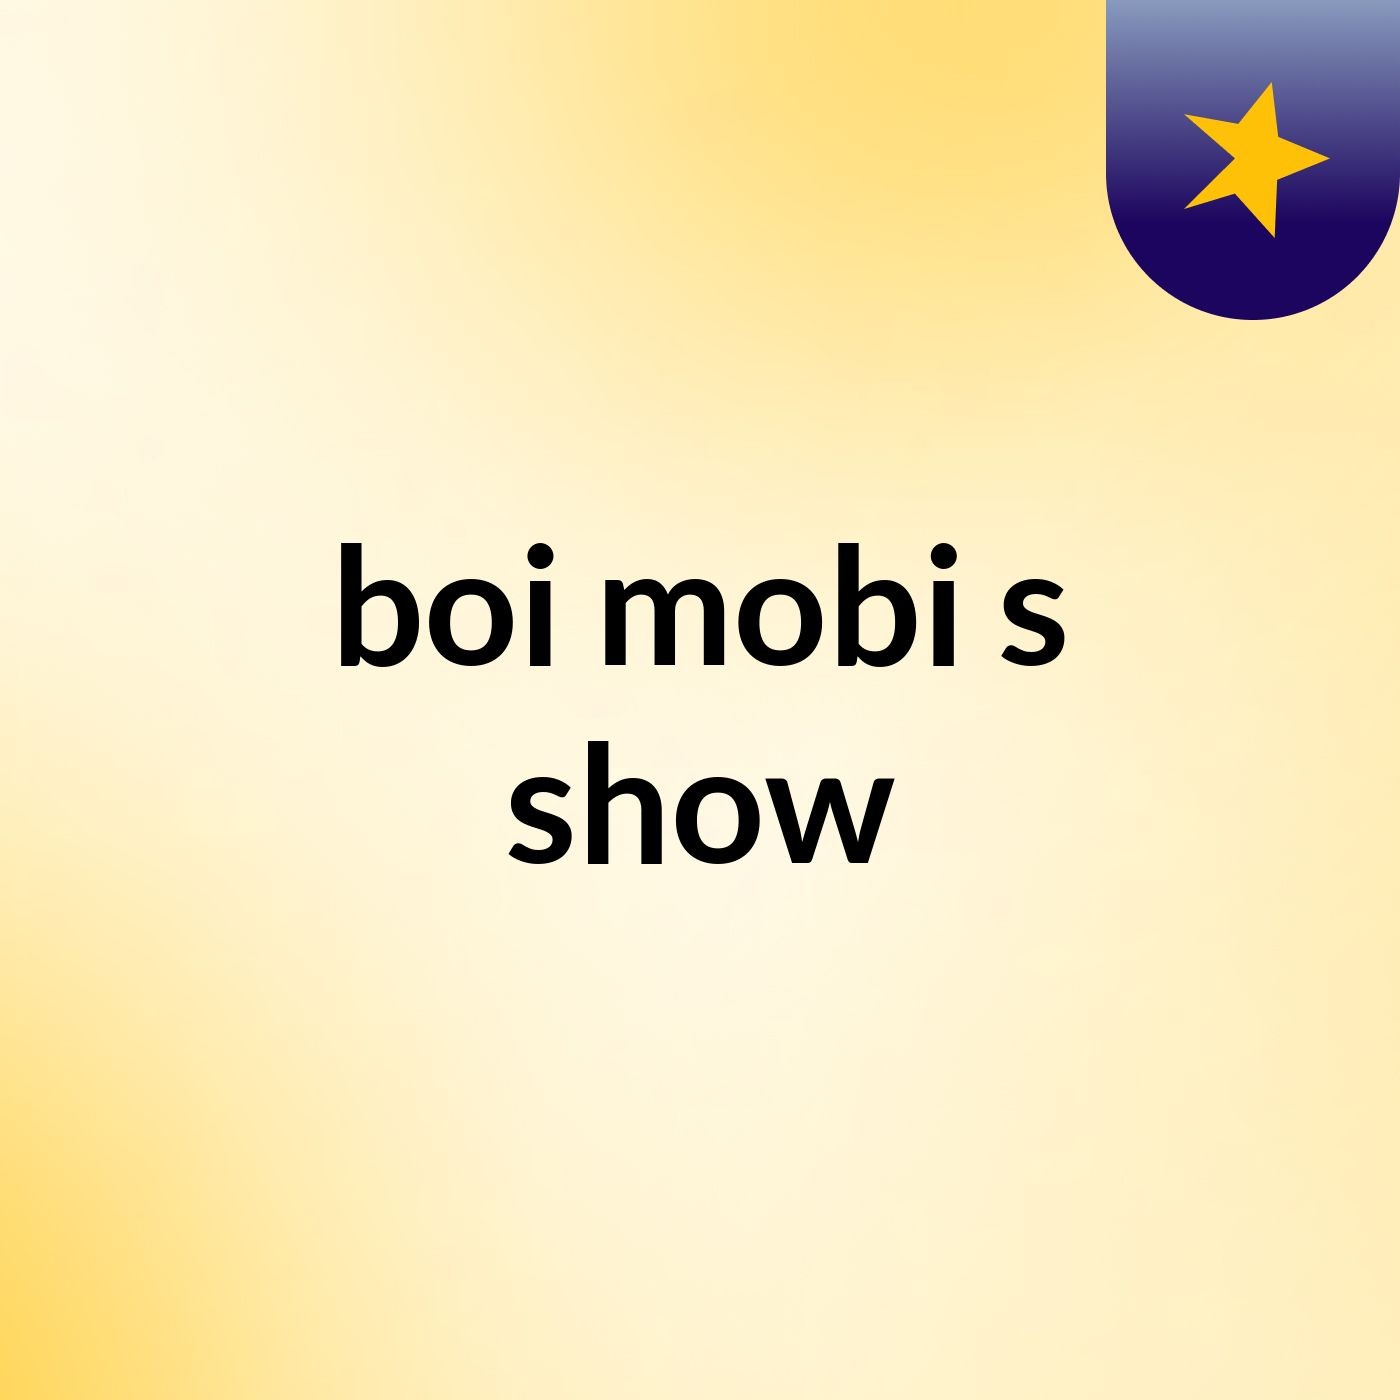 boi mobi's show